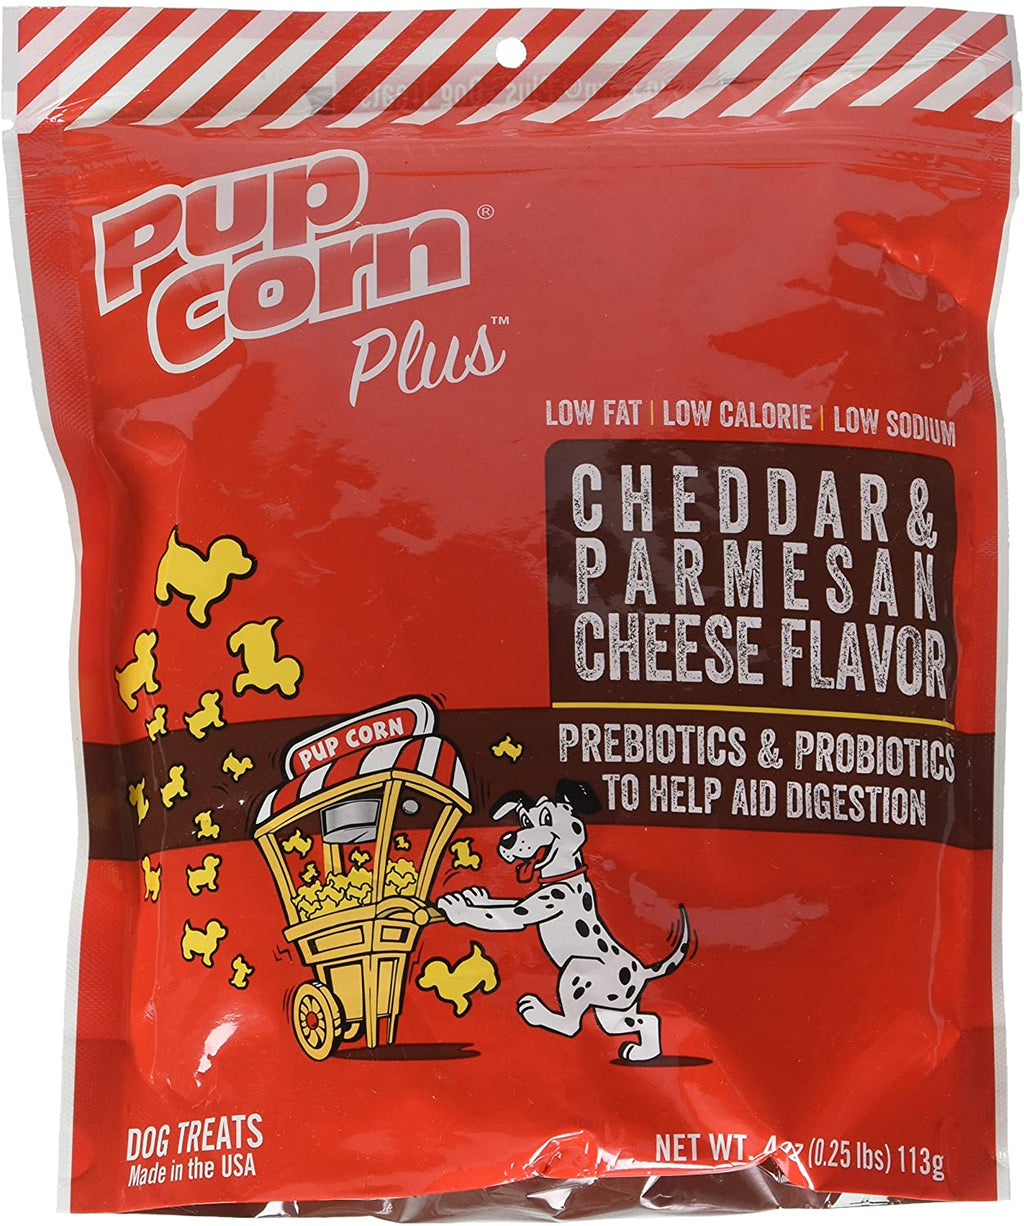 Sunshine Mills Pupcorn Plus Parmesan & Cheddar Cheese Natural Dog Treats - 4 oz - Case ...